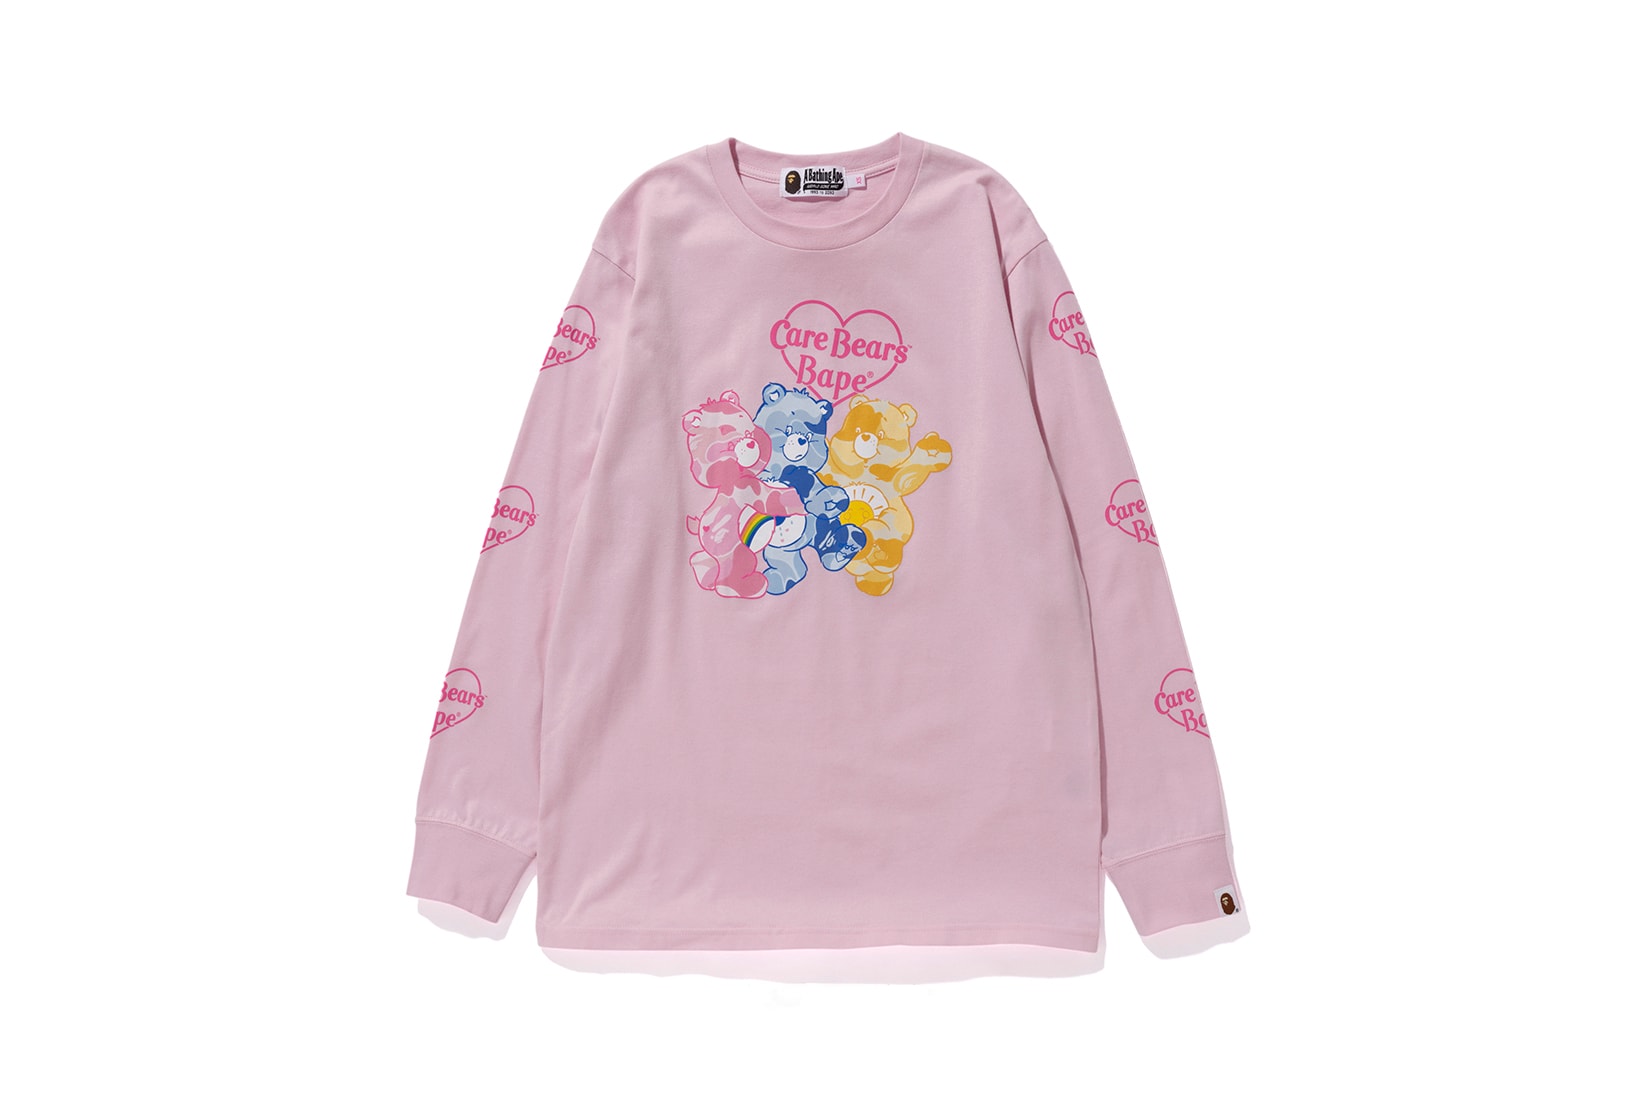 Care Bears x BAPE Collection Long Sleeve T-Shirt Pink